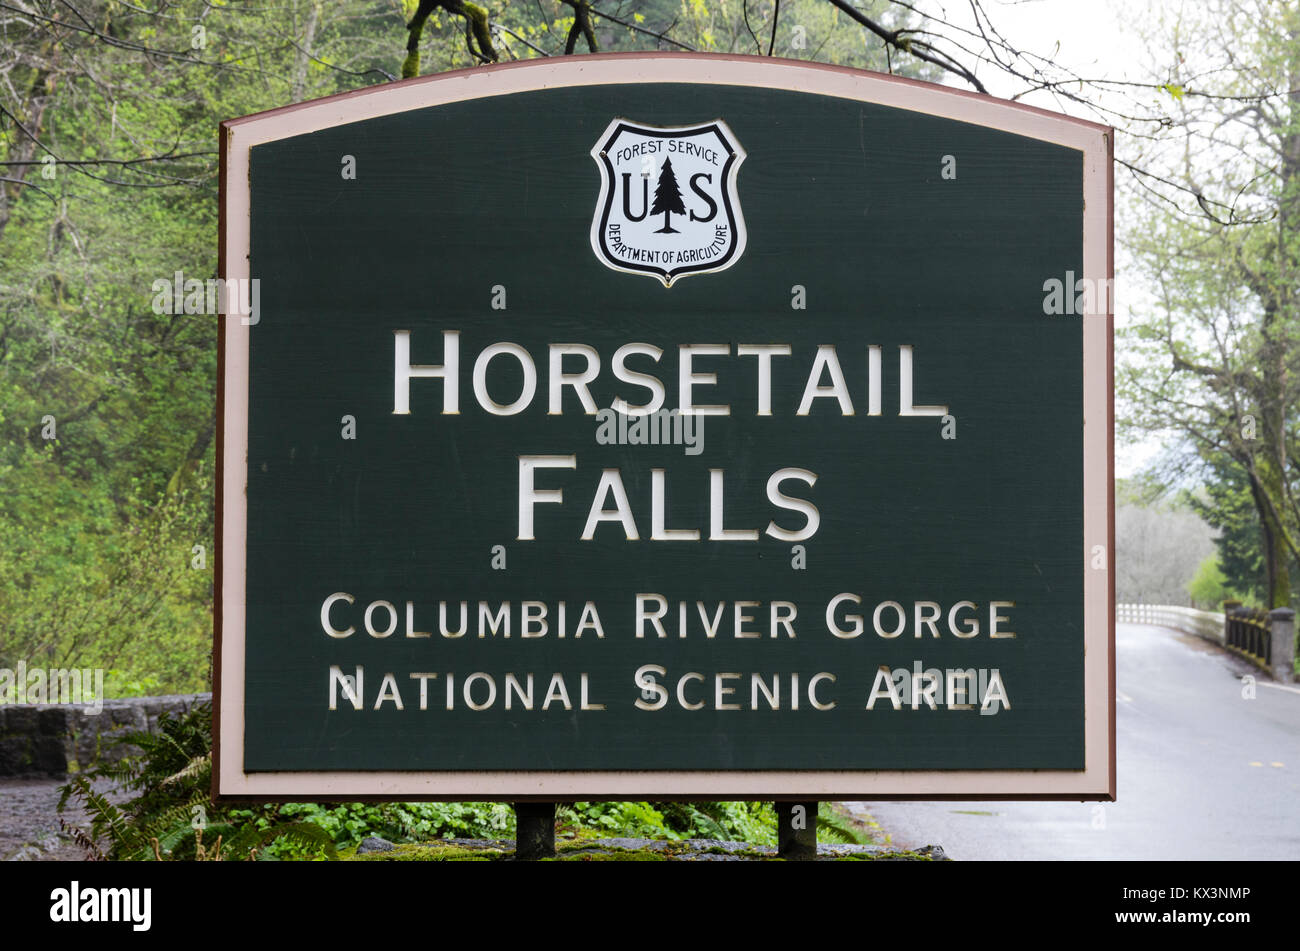 Signo de Equiseto o cola de caballo cae en la Columbia Gorge National Scenic Area Foto de stock